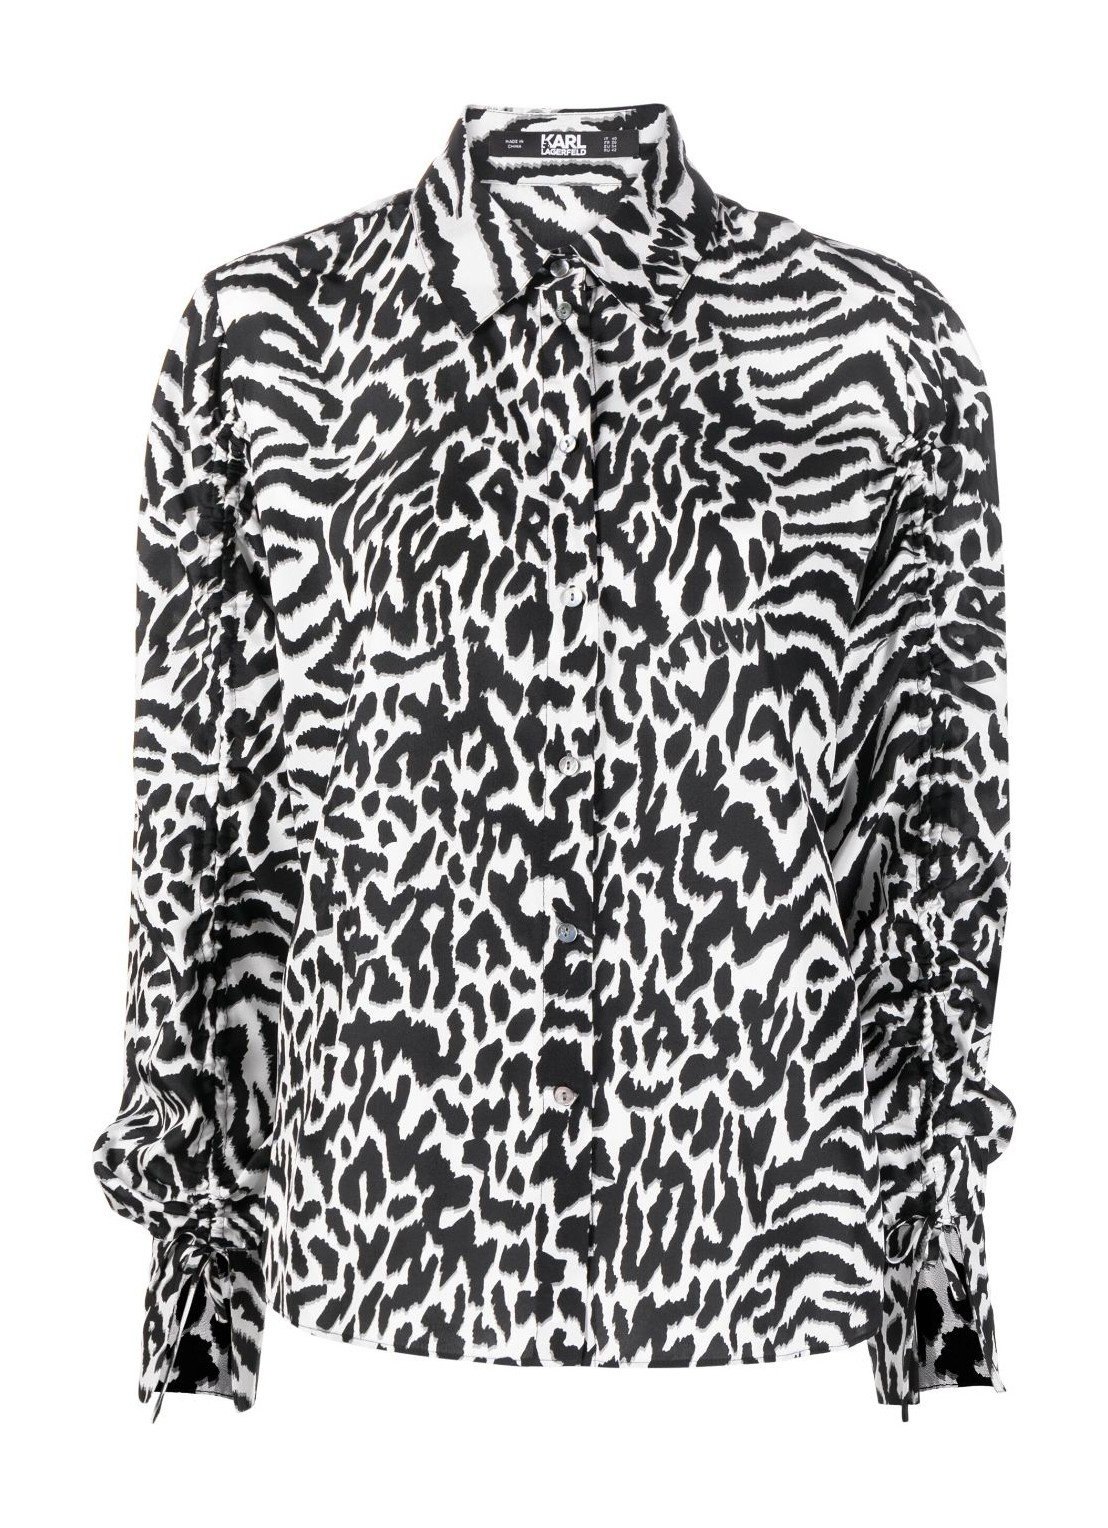 Camiseria karl lagerfeld shirt woman animal print silk shirt 240w1604 r04 talla 44
 